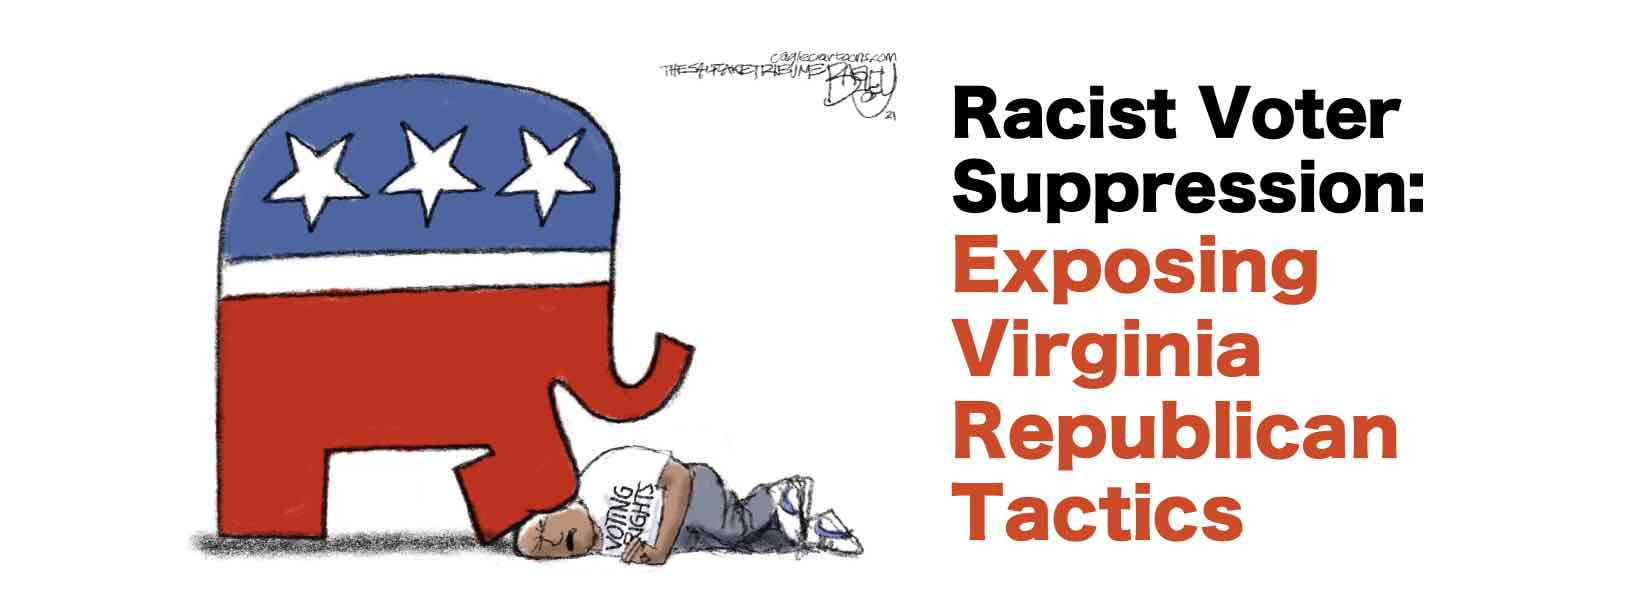 Racist Voter Suppression Exposing Virginia Republican Tactics
